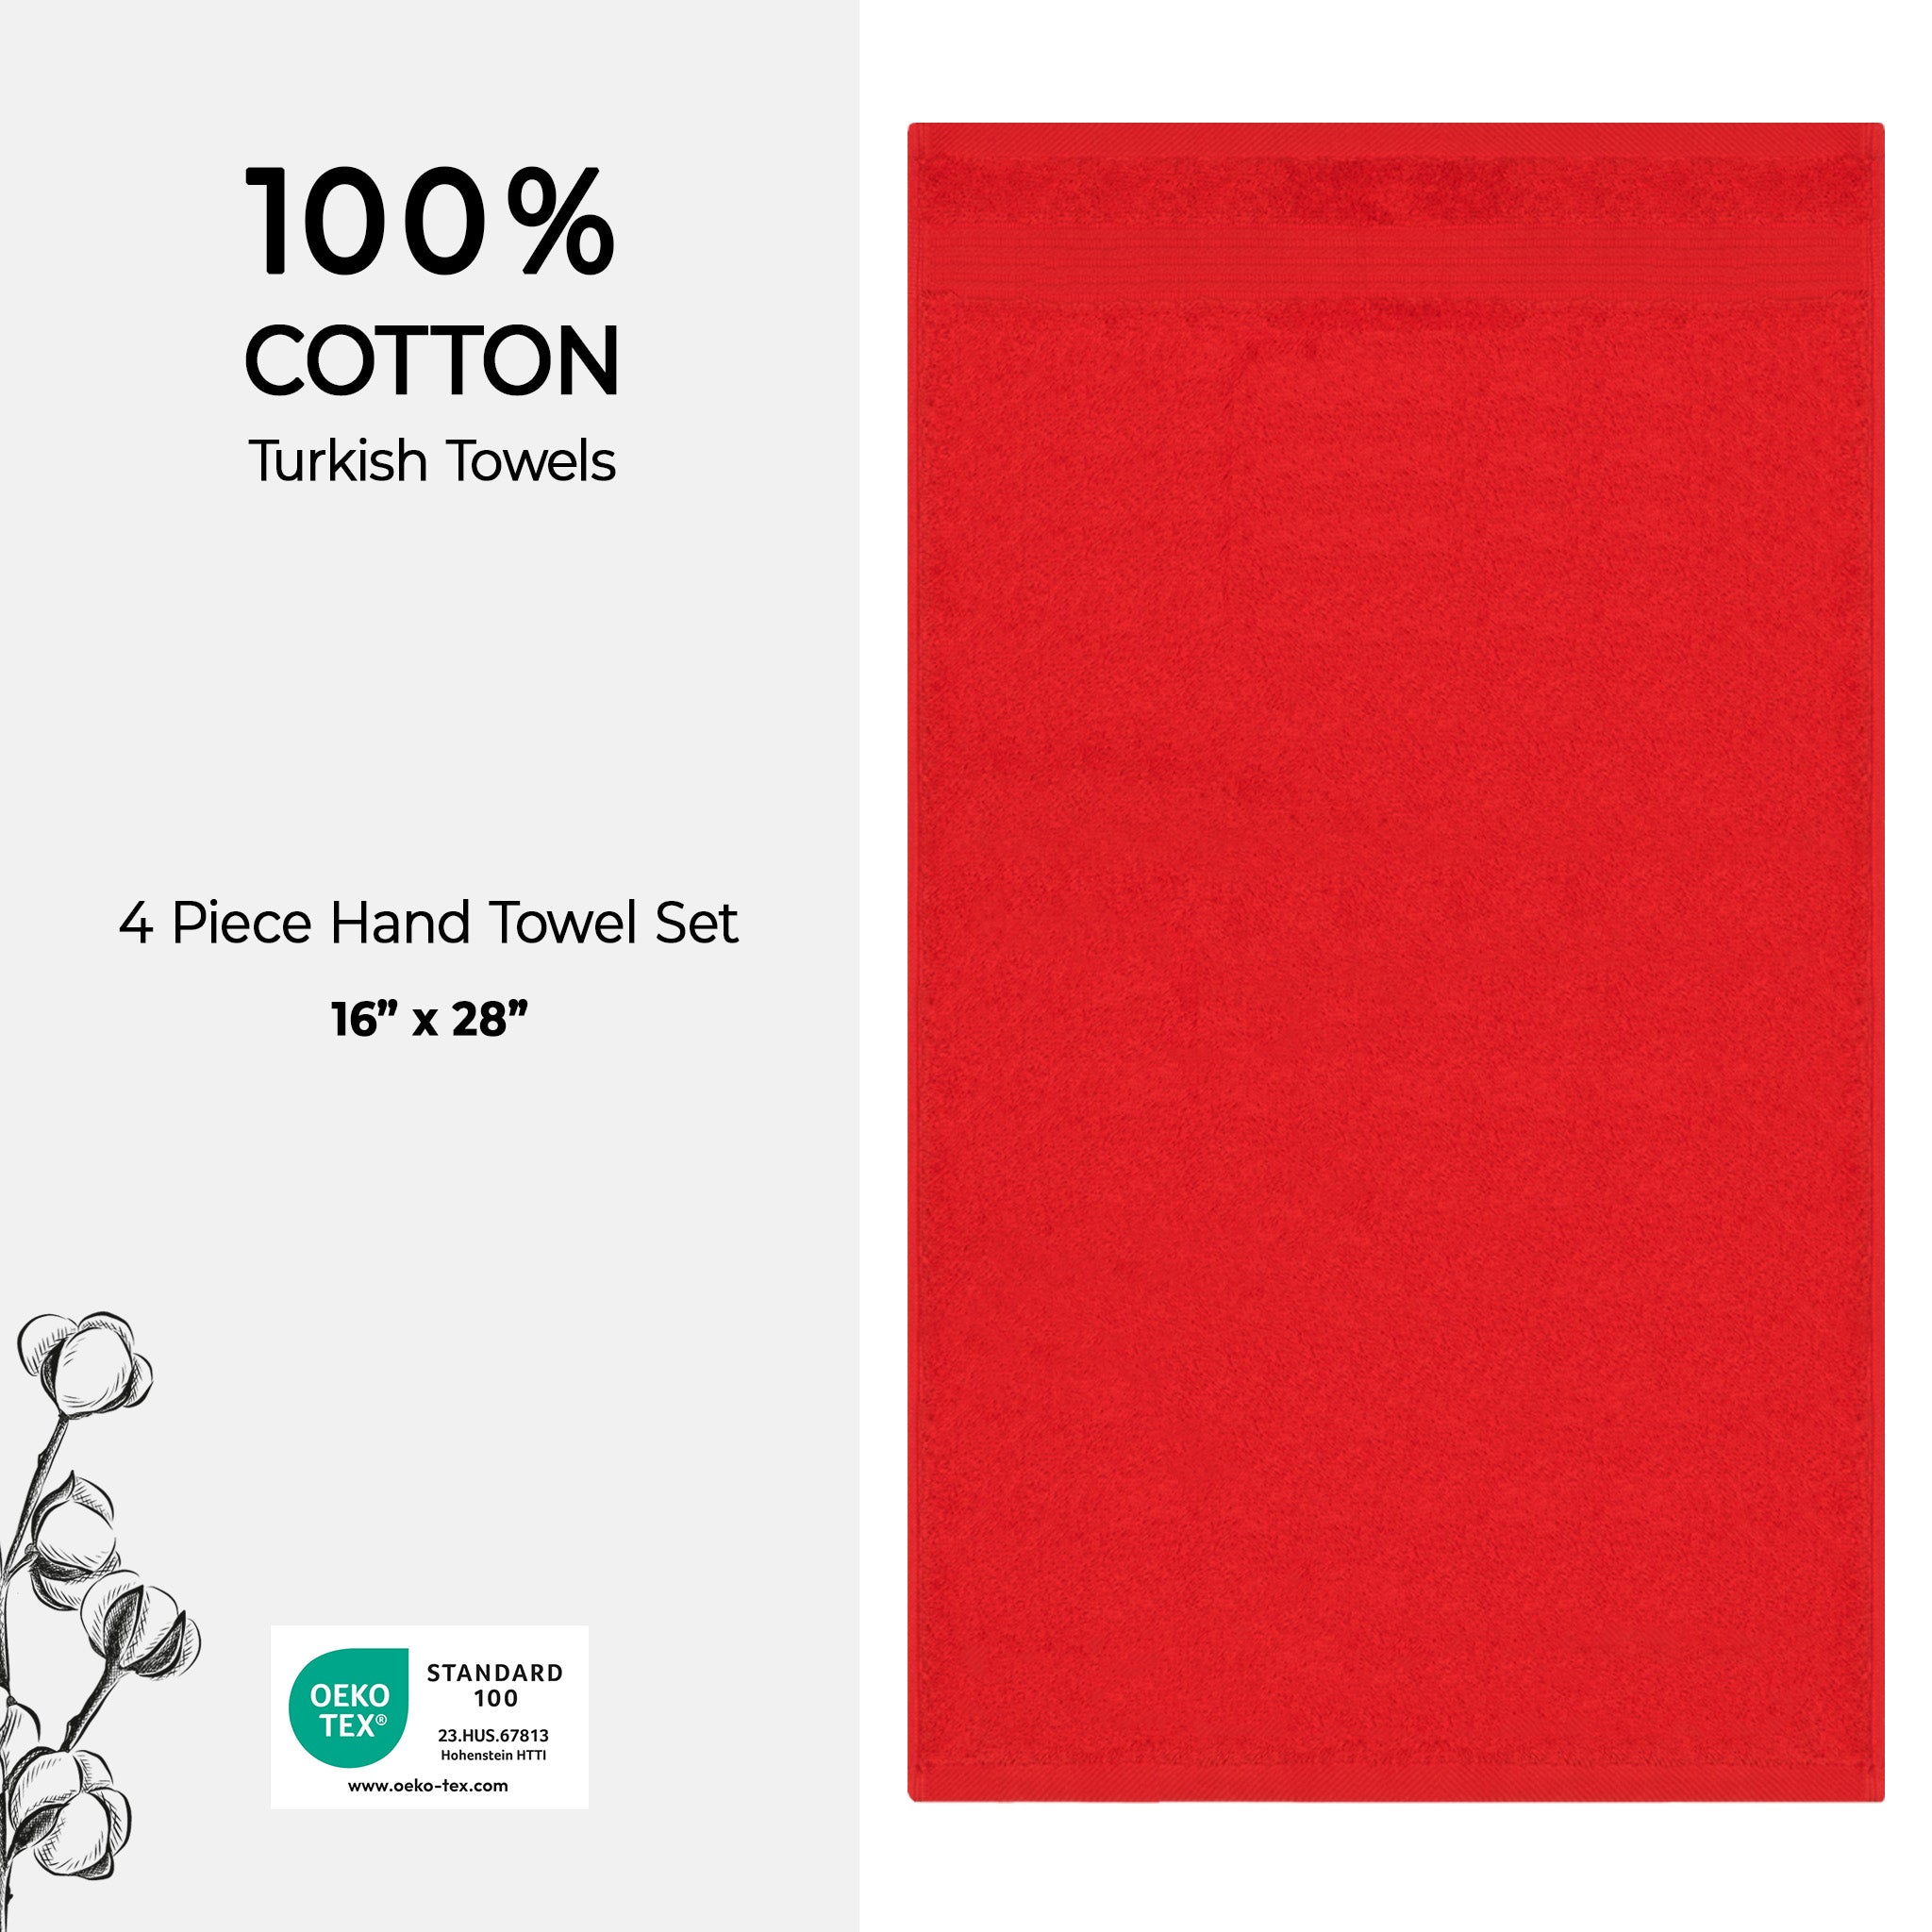 American Soft Linen Bekos 100% Cotton Turkish Towels, 4 Piece Hand Towel Set -red-04